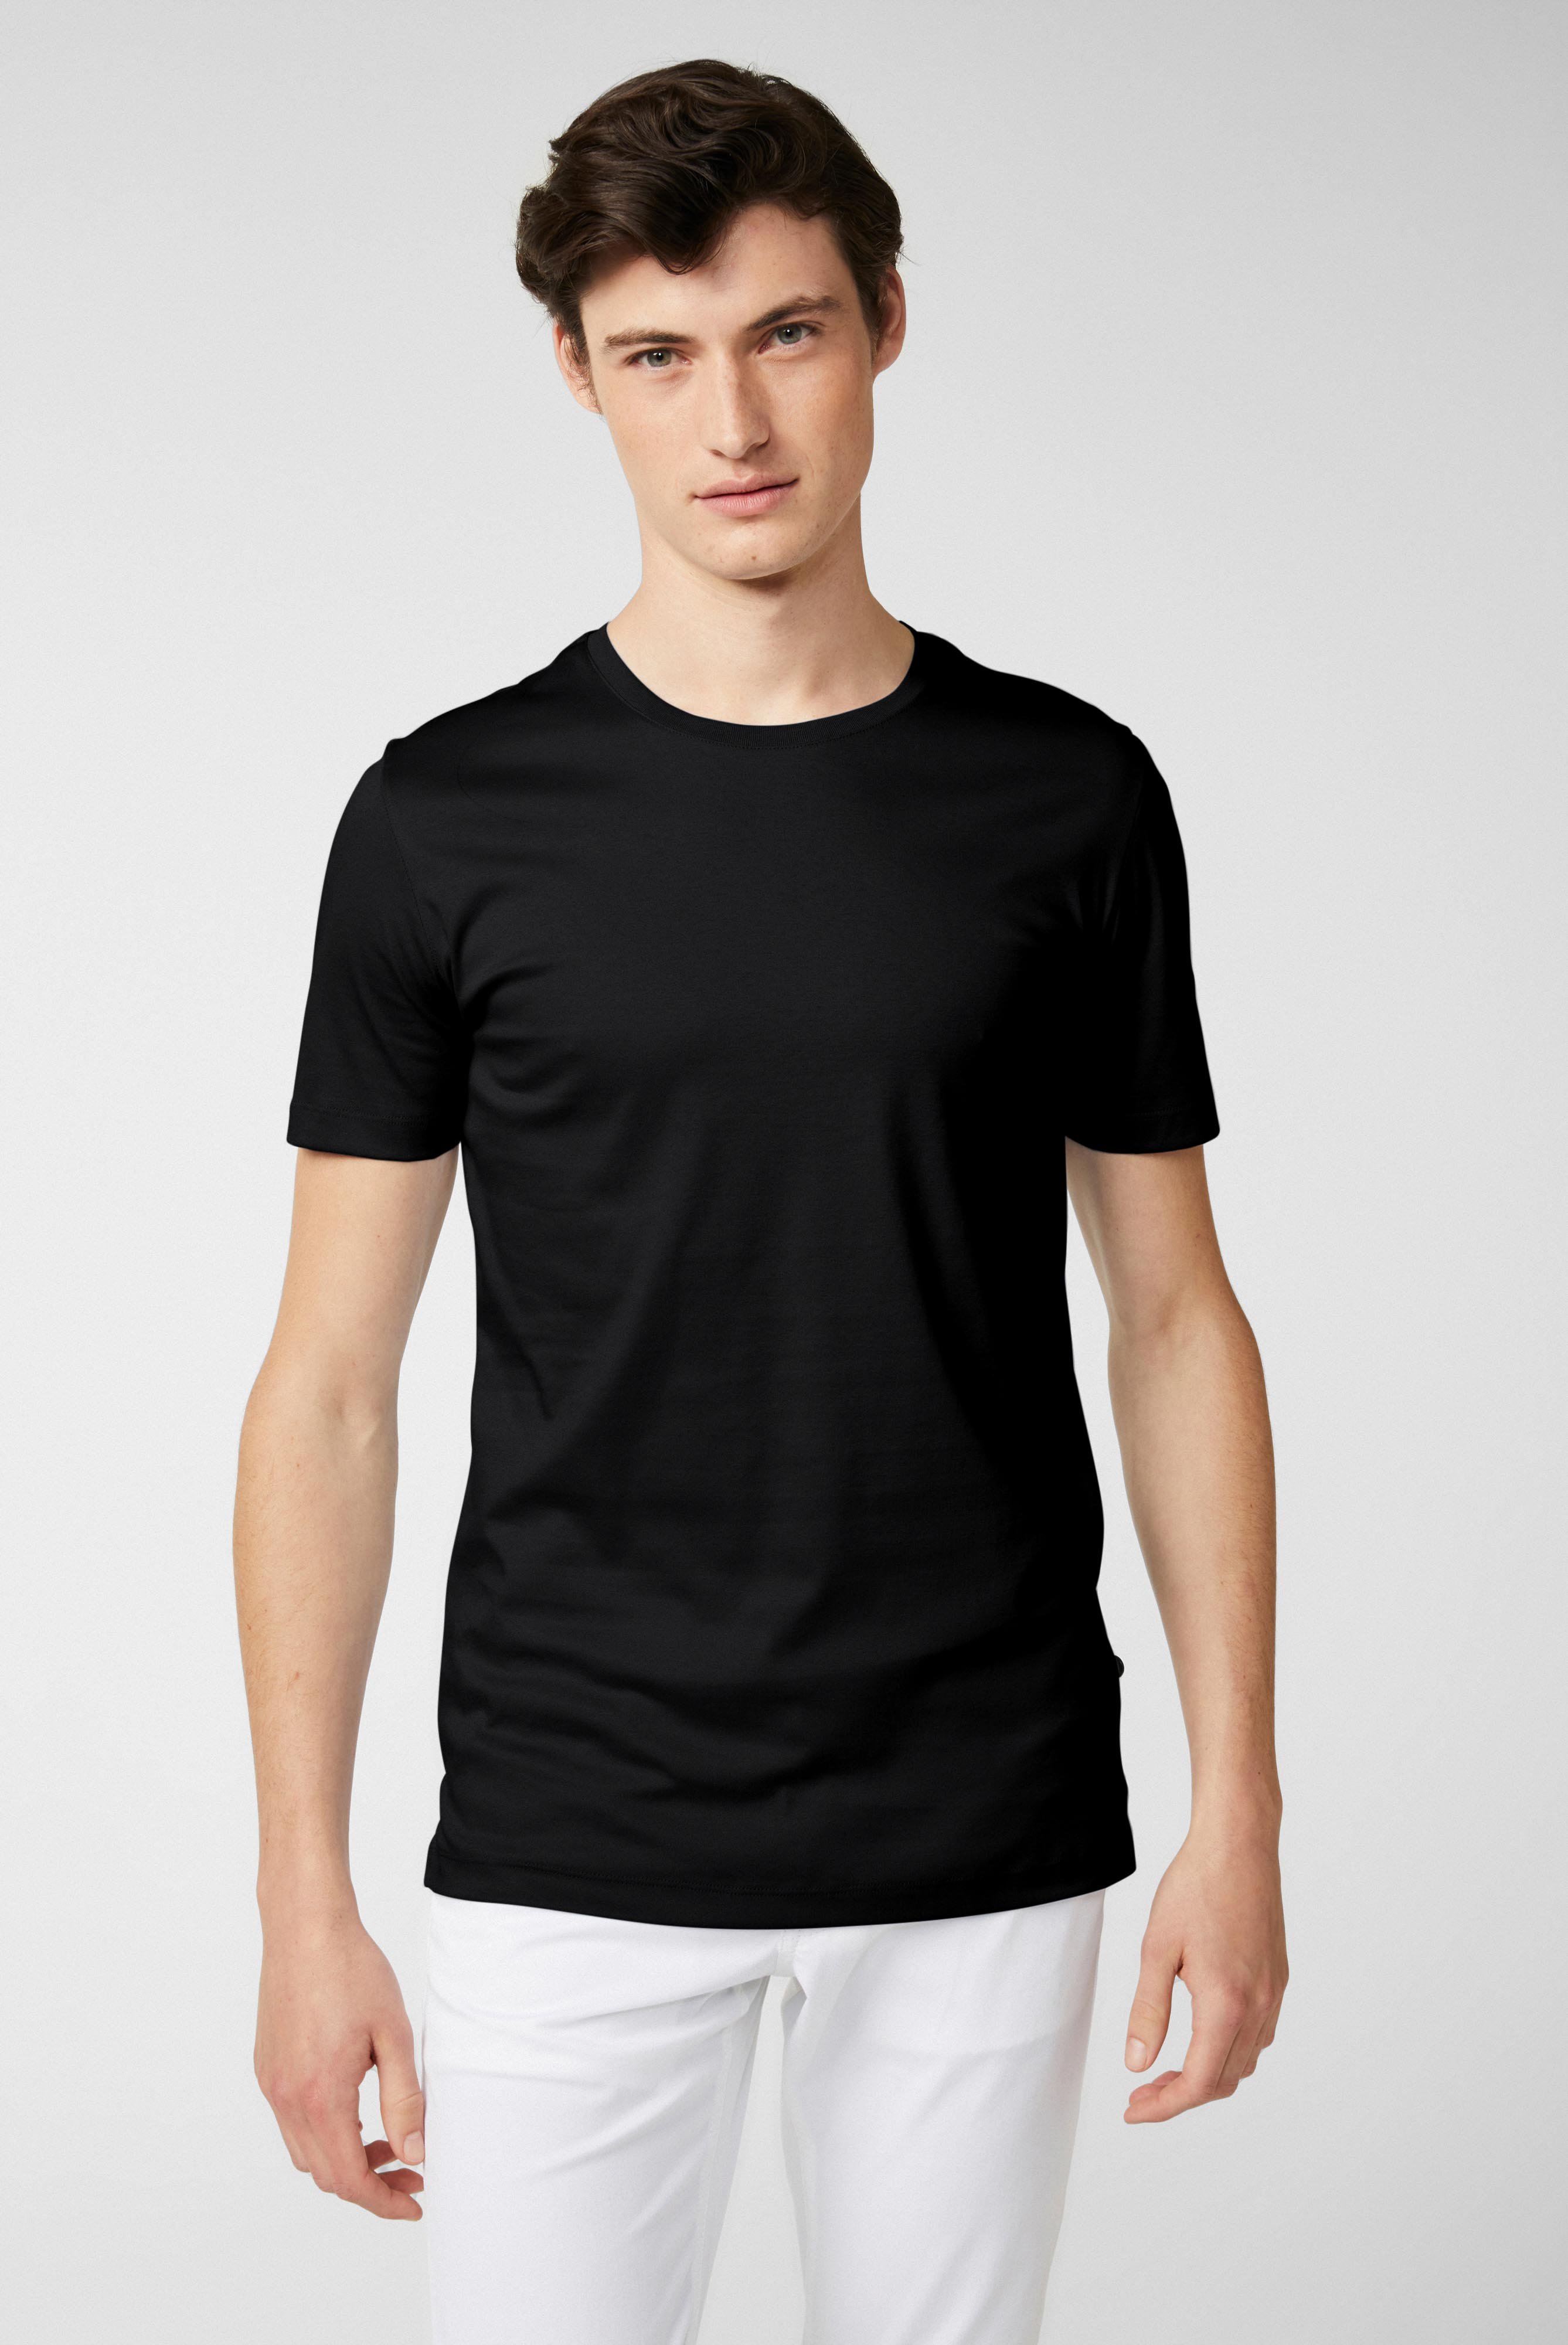 T-Shirts+Swiss Cotton Jersey Crew Neck T-Shirt+20.1717.UX.180031.099.M